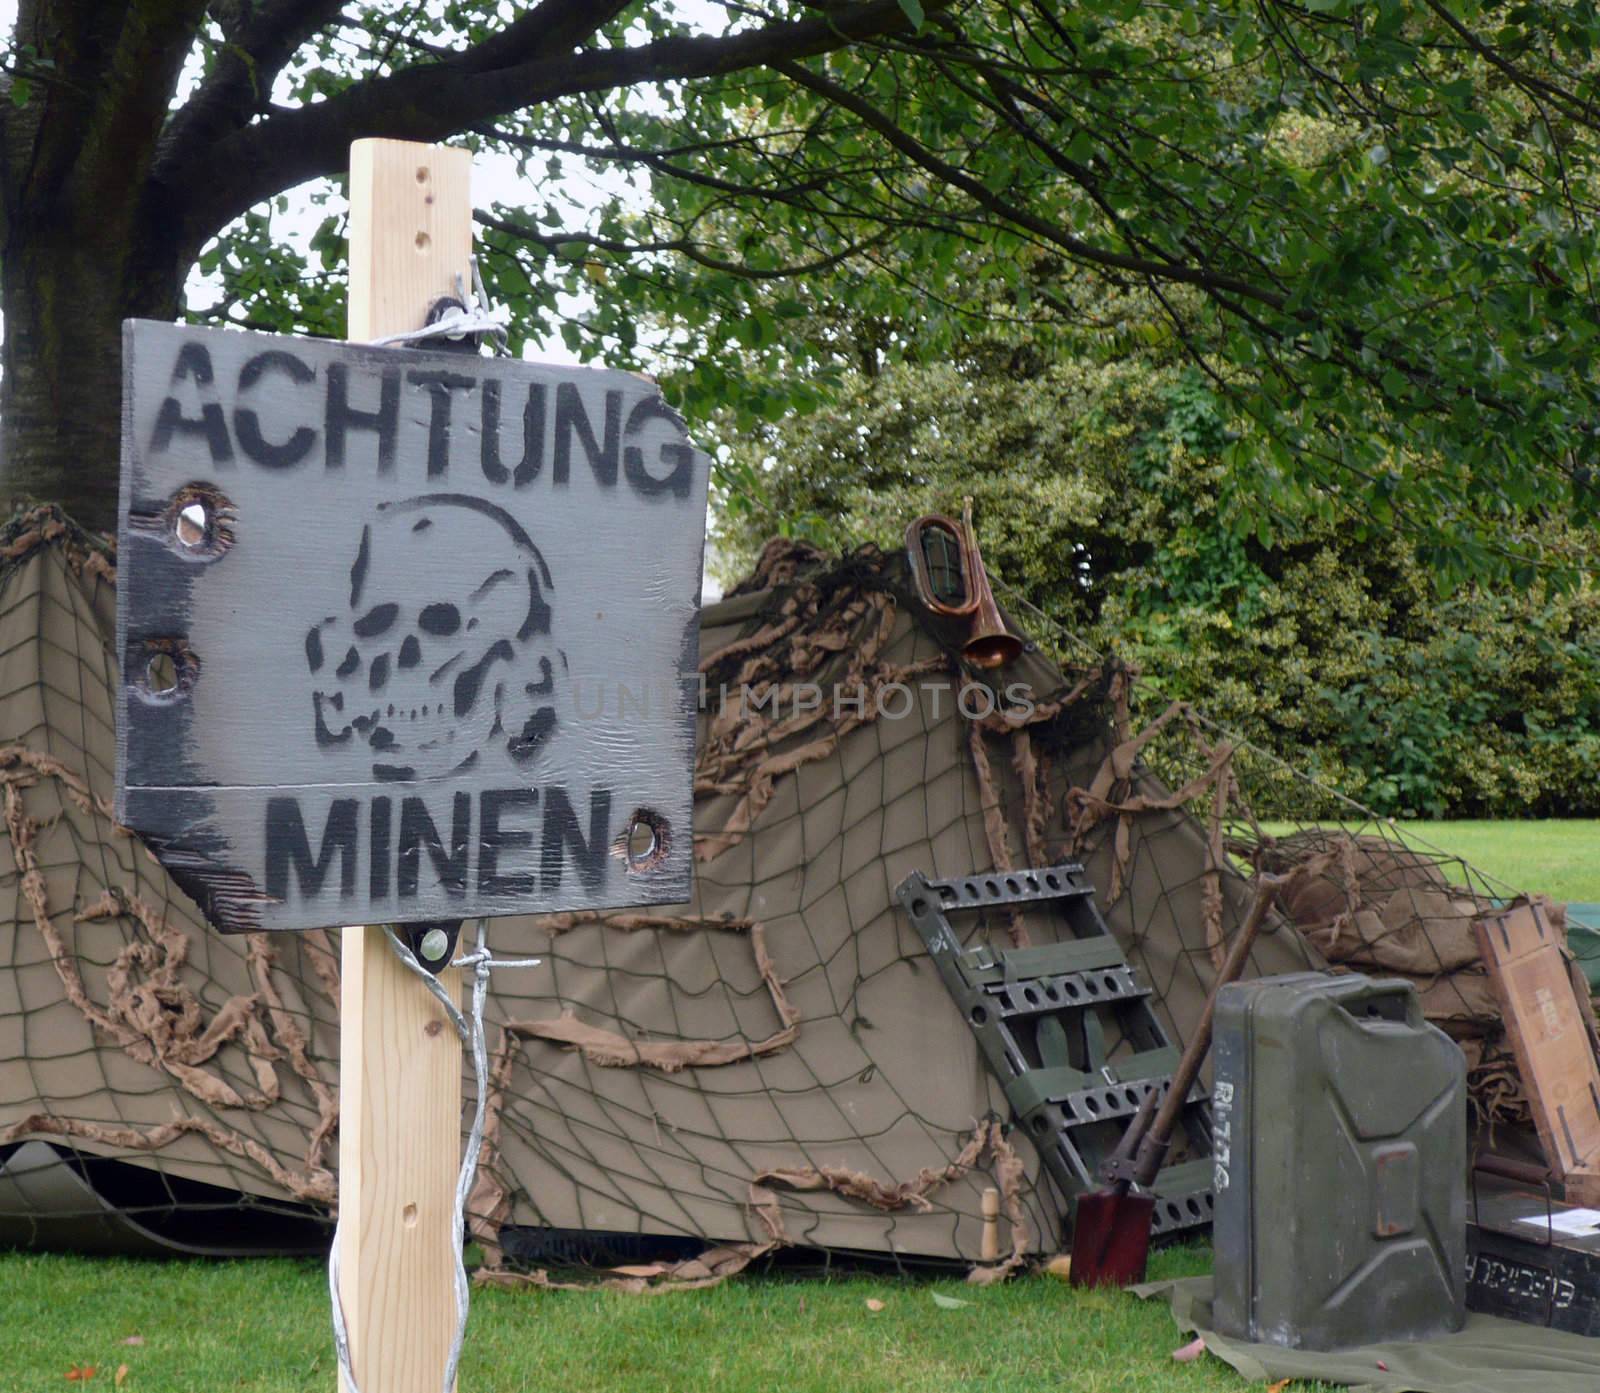 Achtung minen german mines by nicemonkey